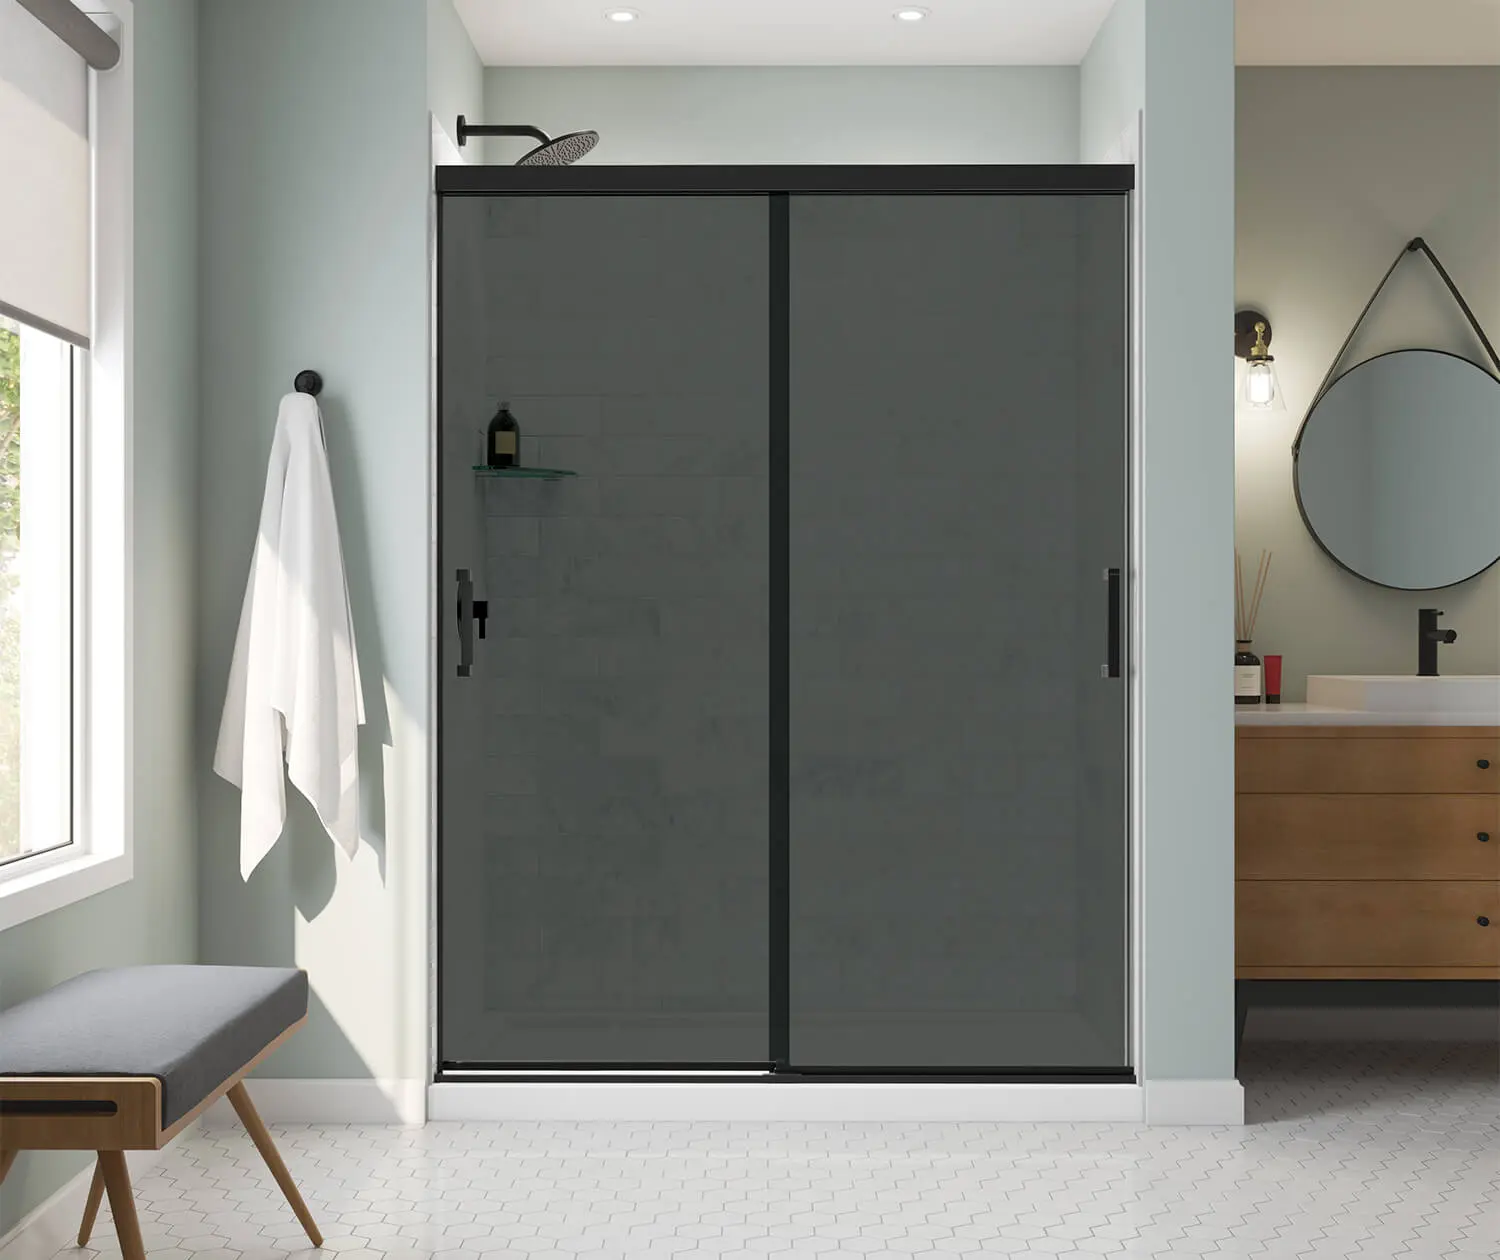 smoked shower doors - How do I make my shower doors clear again